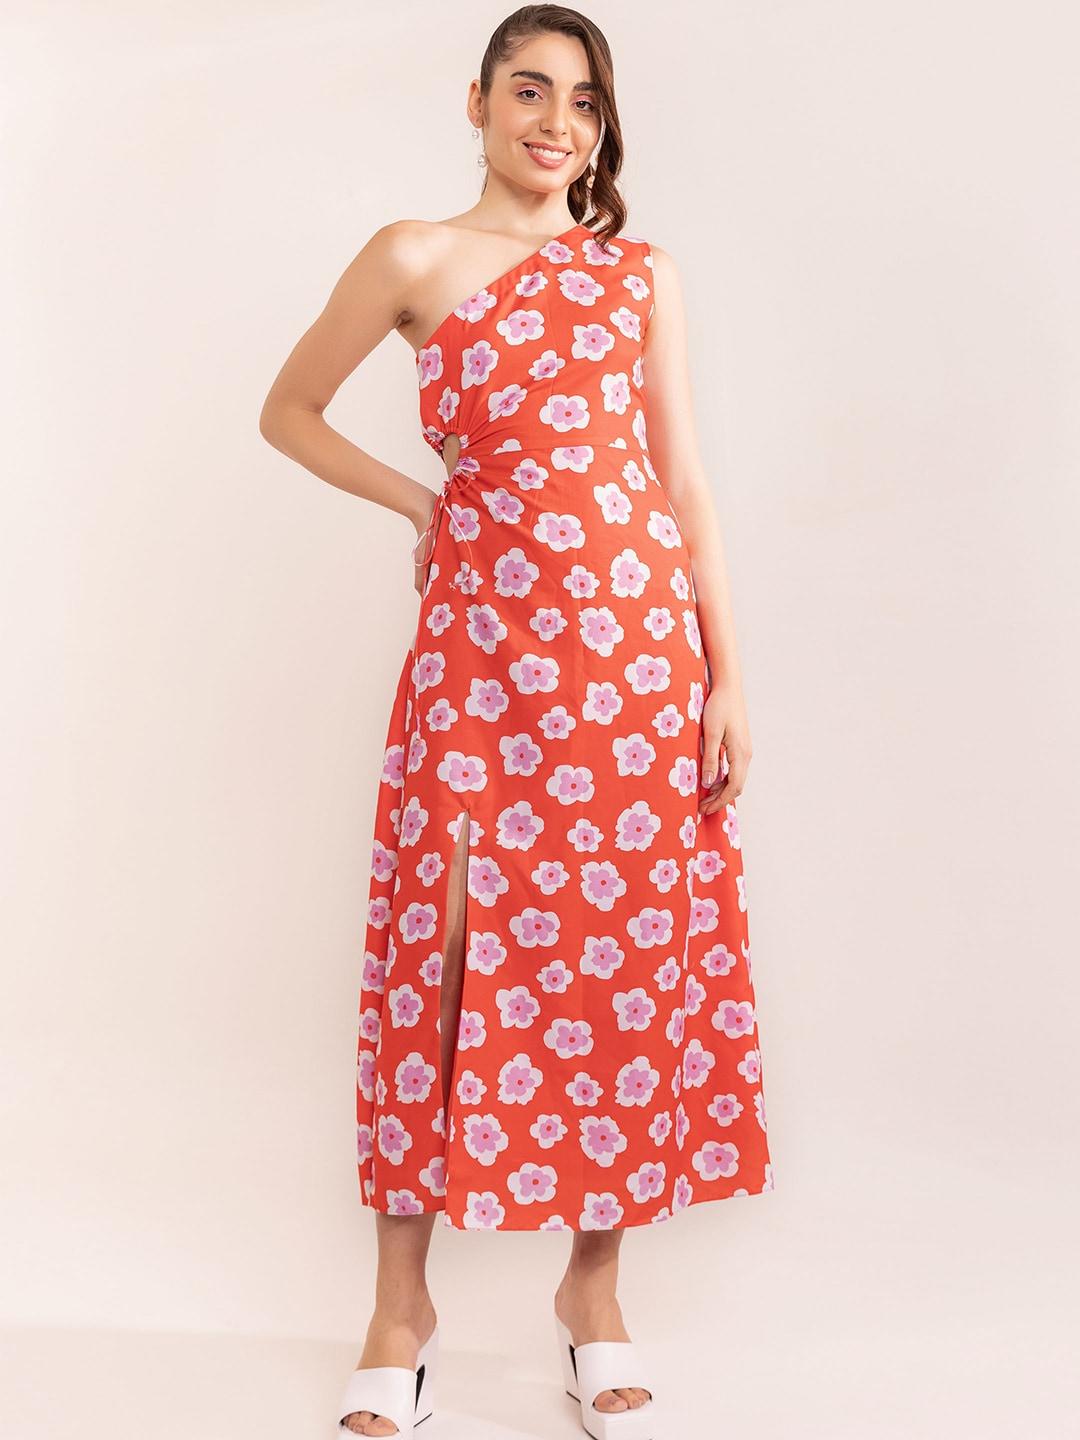 kaori-by-shreya-agarwal-red-floral-print-fit-&-flare-midi-dress